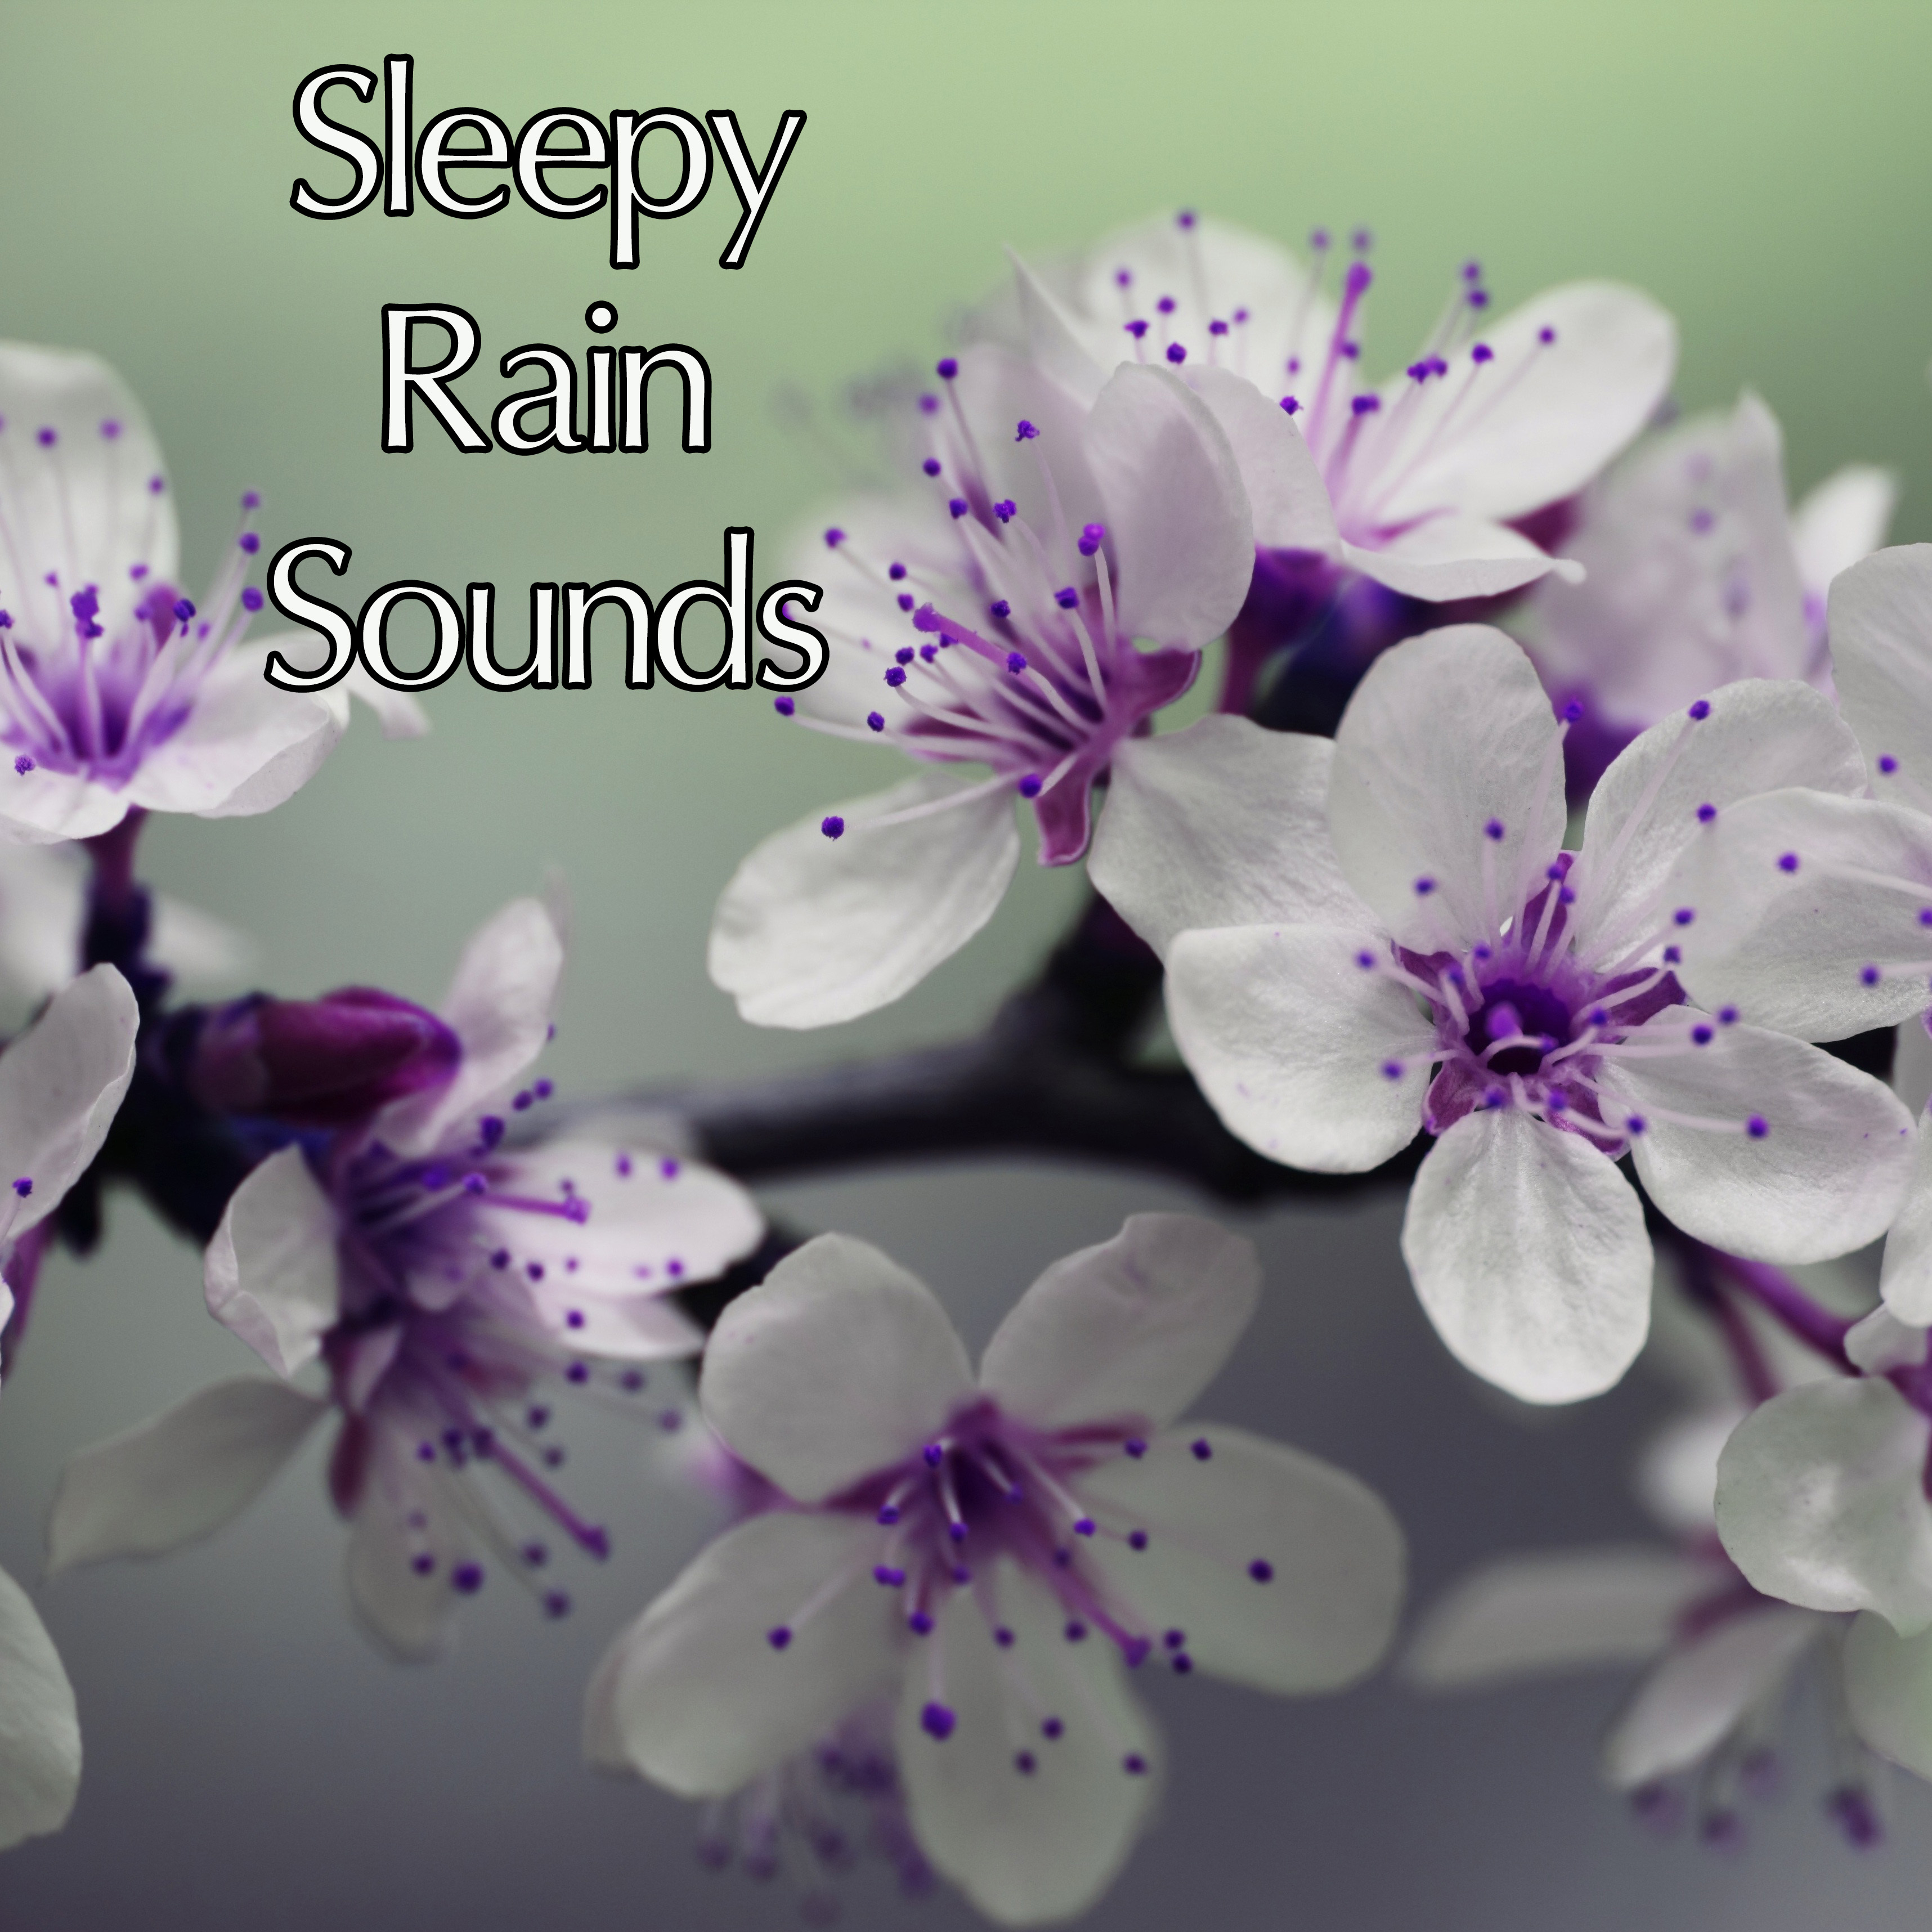 19 Rain and Nature Sounds - Sleep and Meditation Sounds